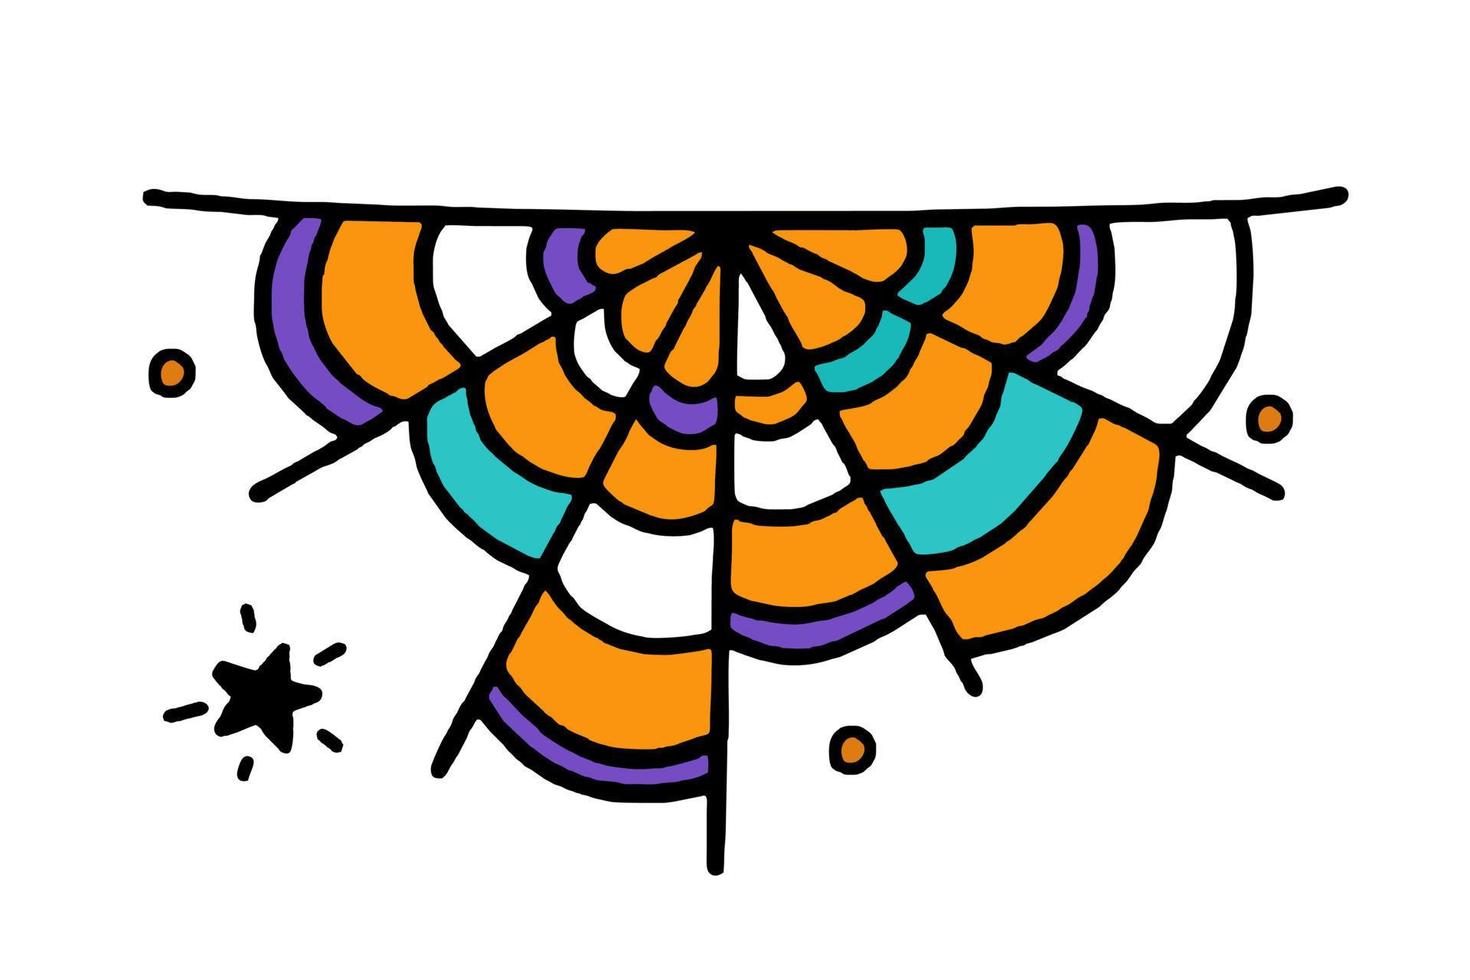 Spindel webb halloween begrepp illustration av vektor klotter stil design isolerat på vit bakgrund